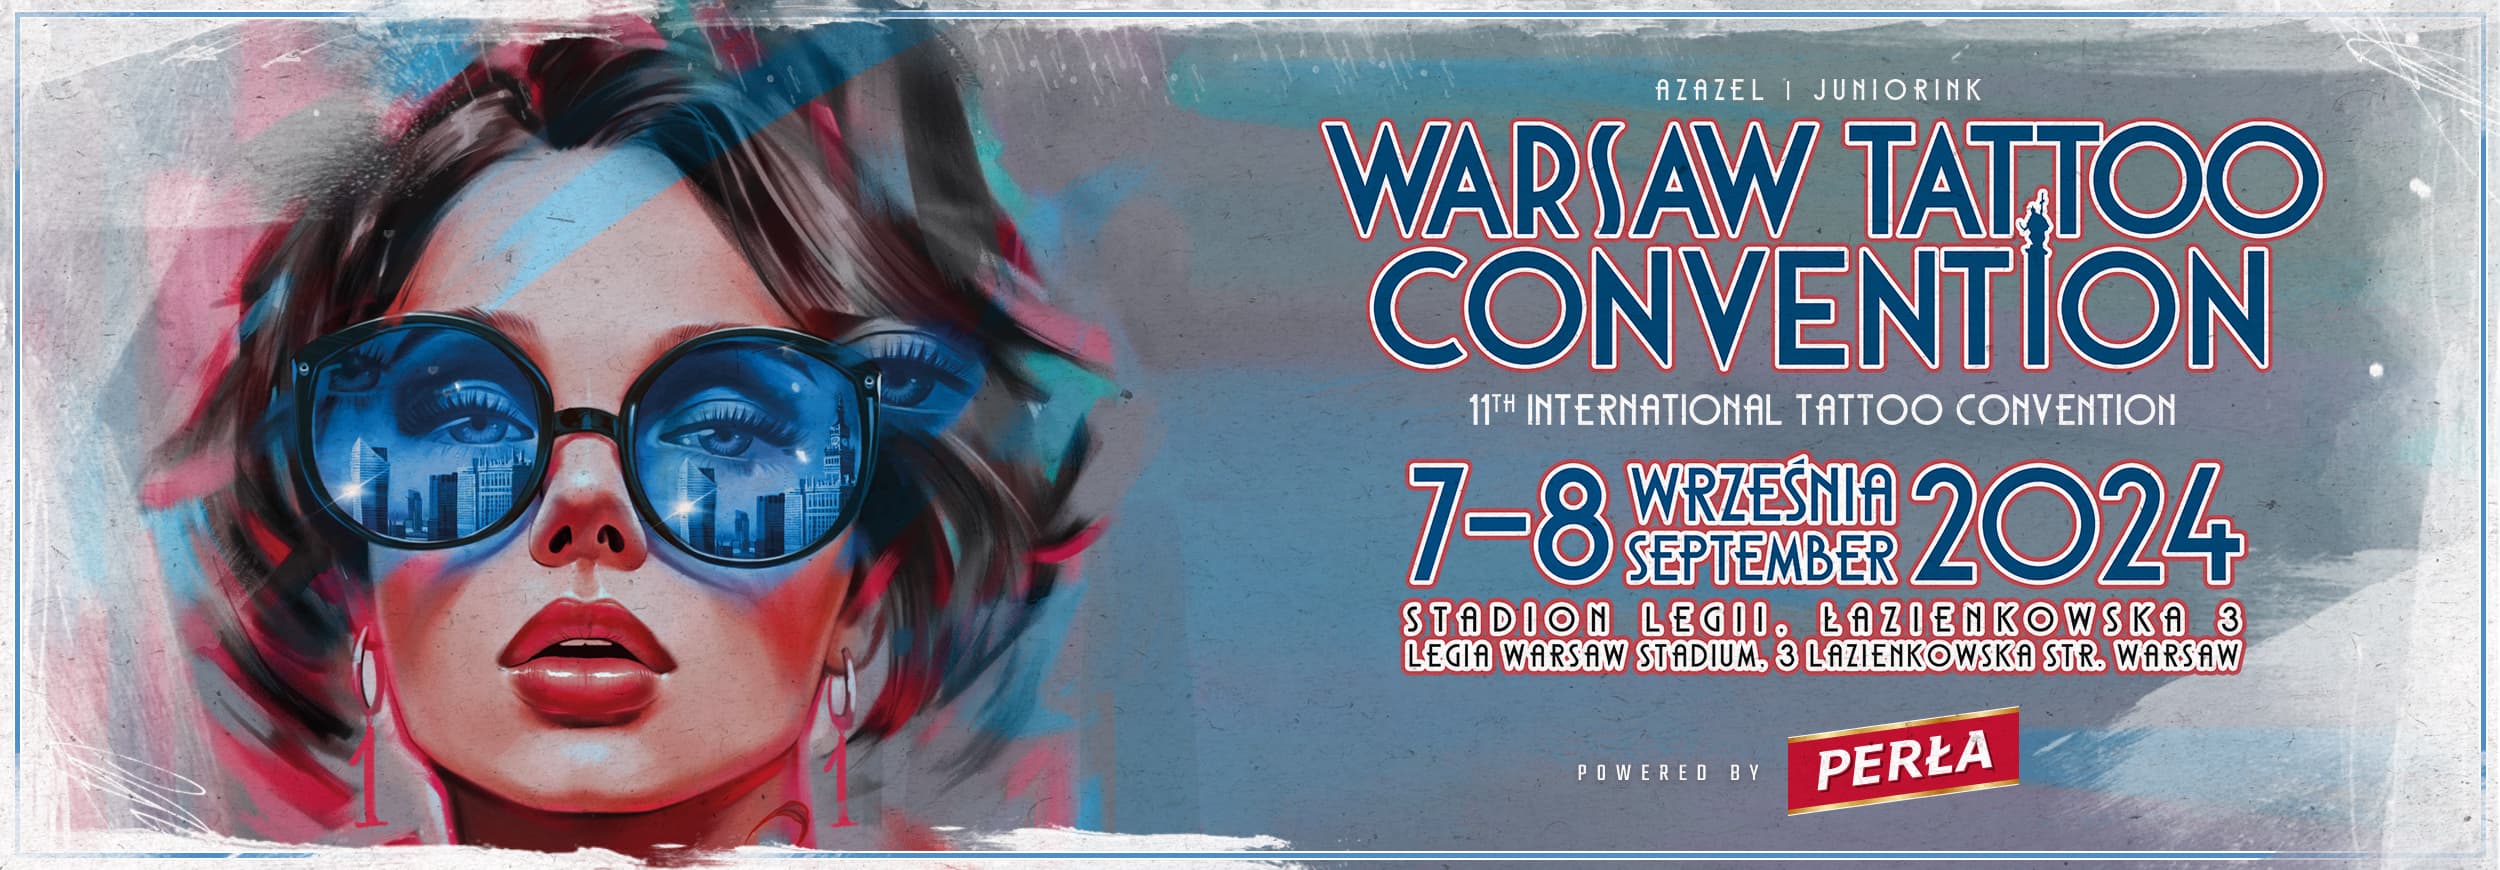 Warsaw Tattoo Convention invitation